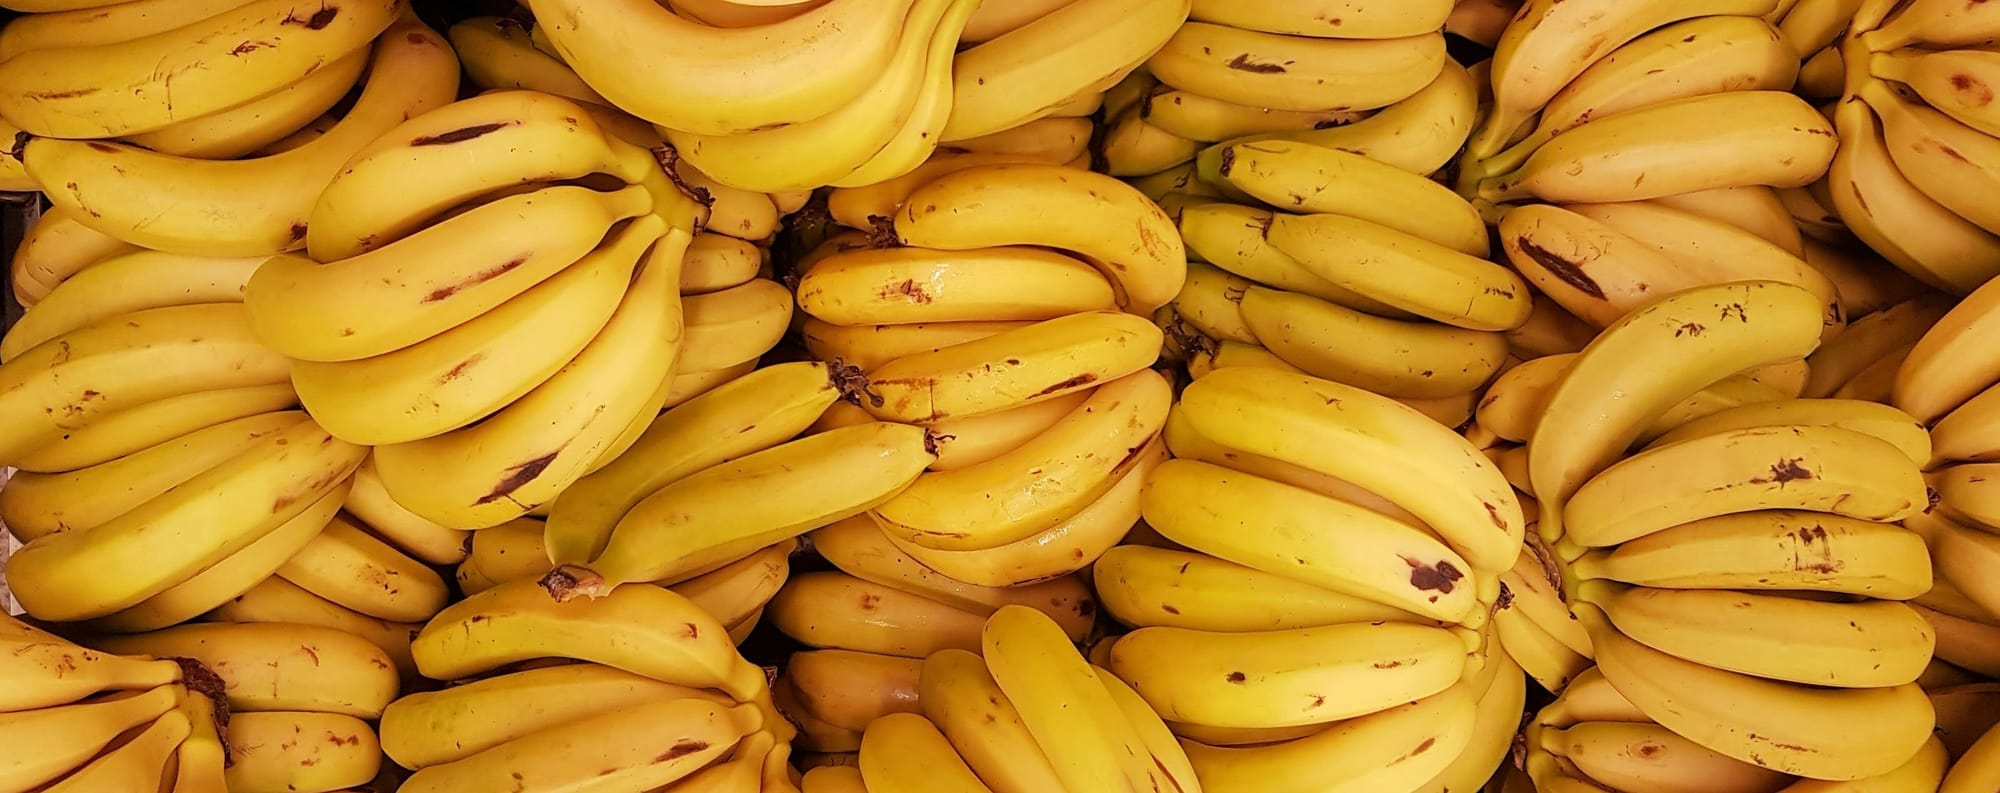 🍌The Banana Rule 🍌